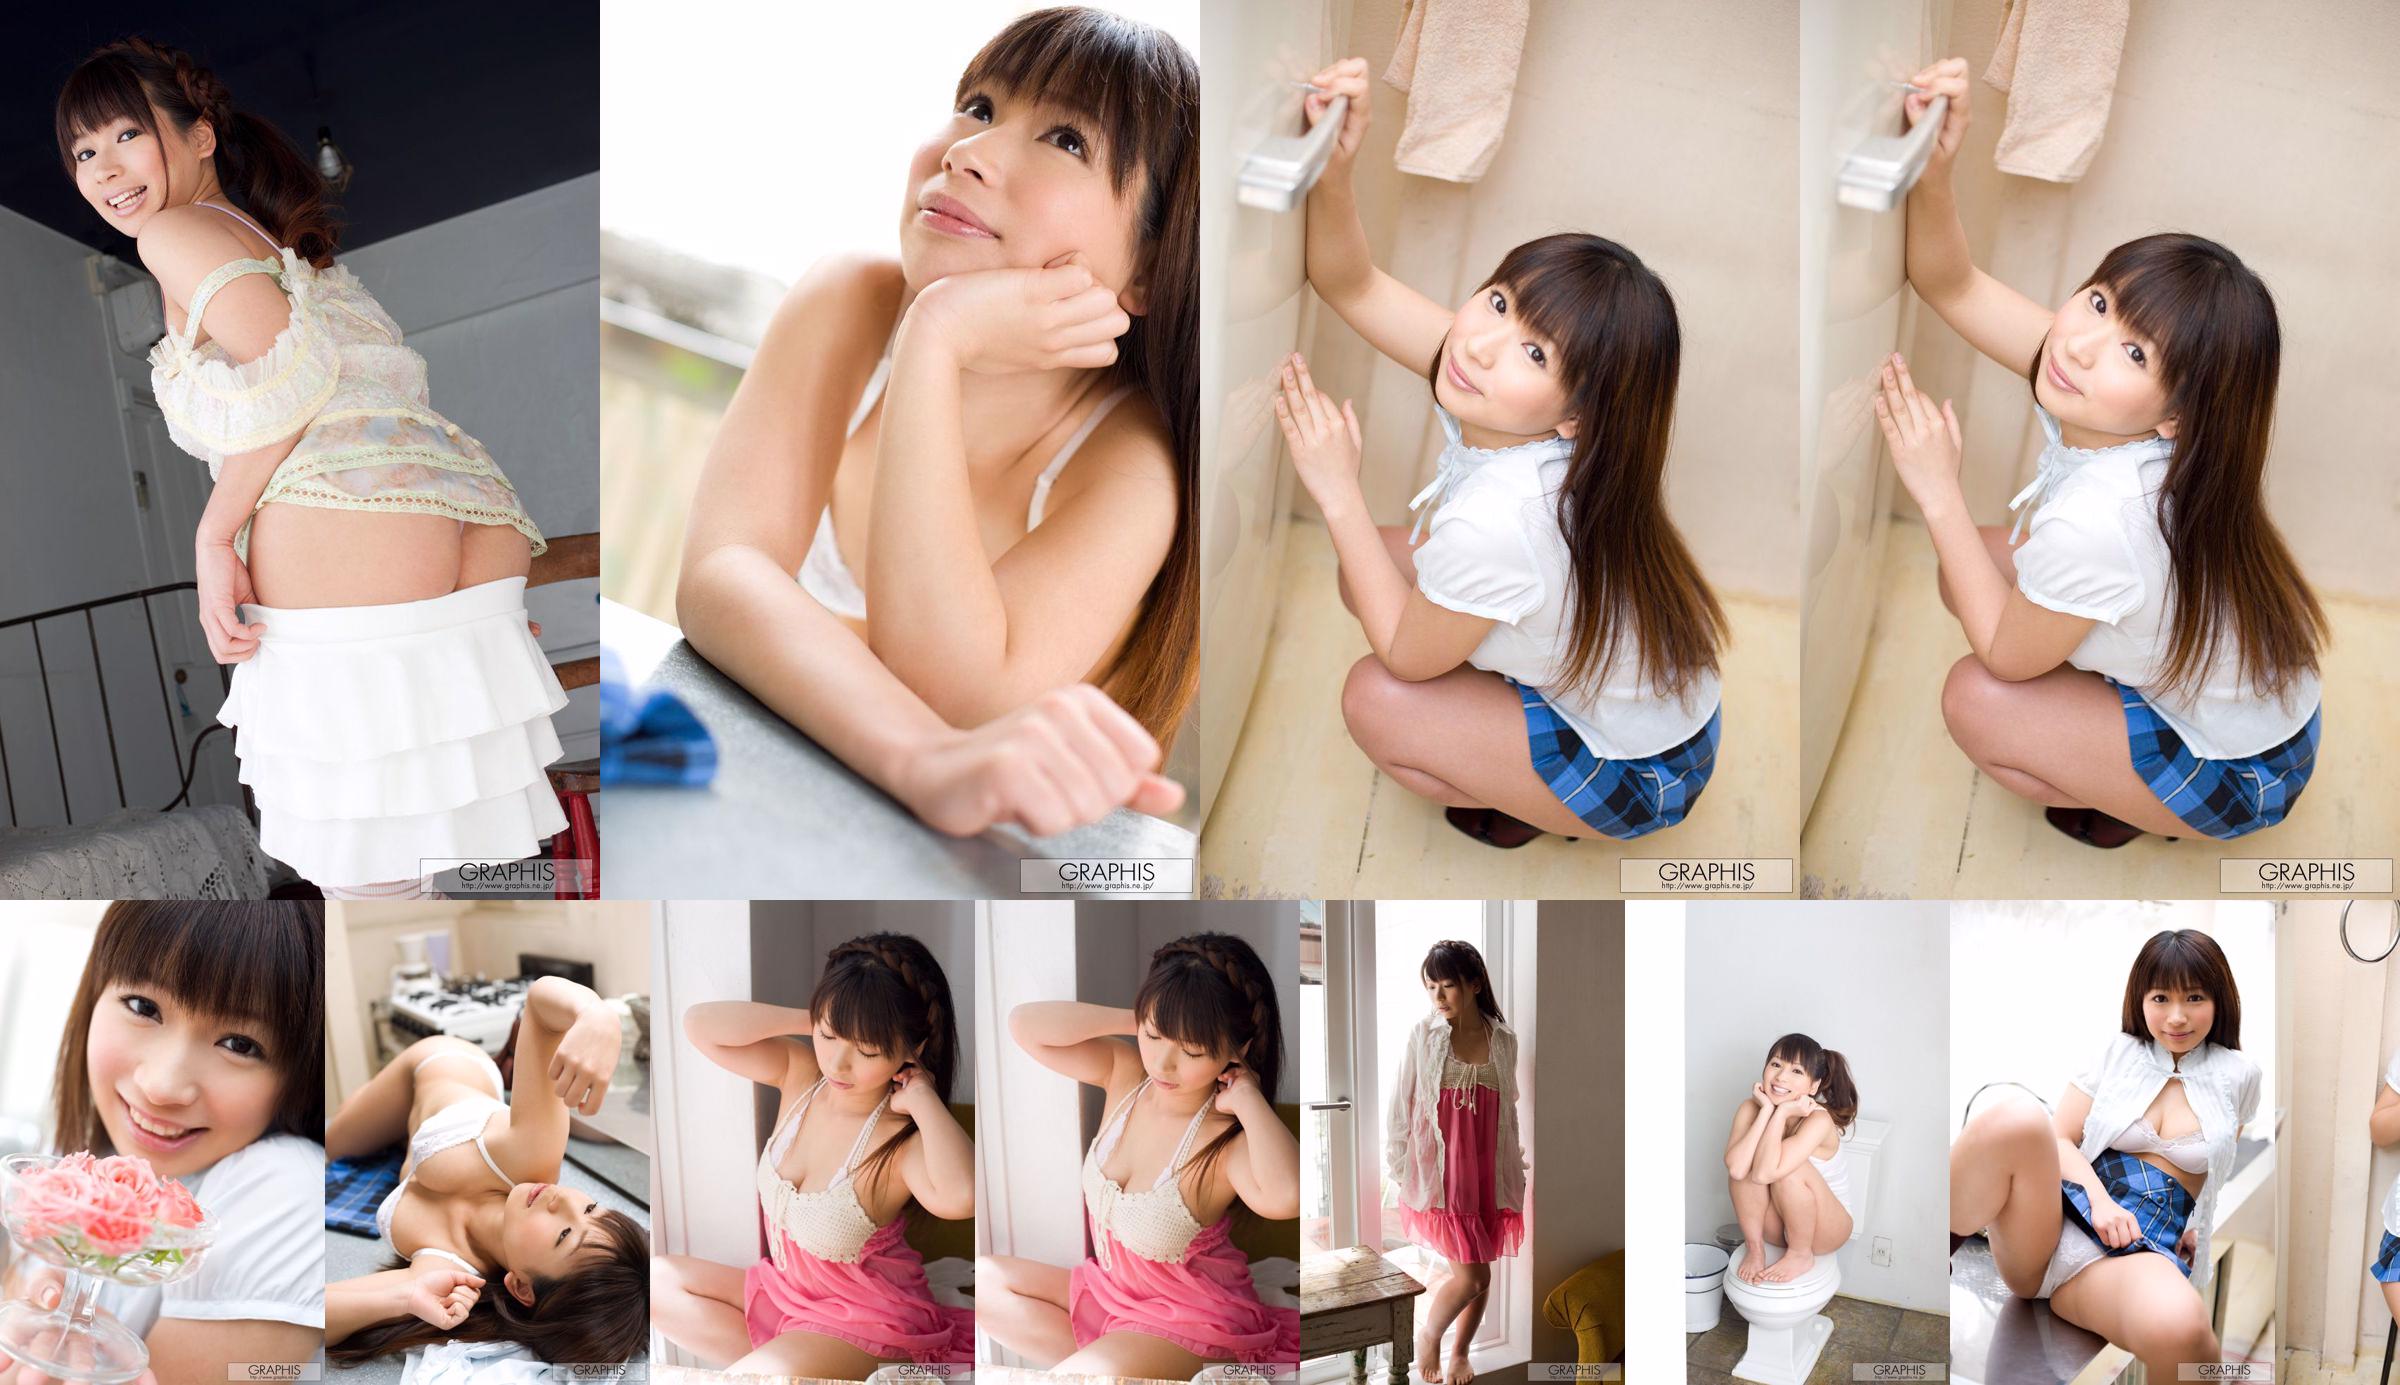 Hitomi Tsuji Hitomi Tsuji [Graphis] First Gravure Con gái đầu lòng No.88b8b5 Trang 1